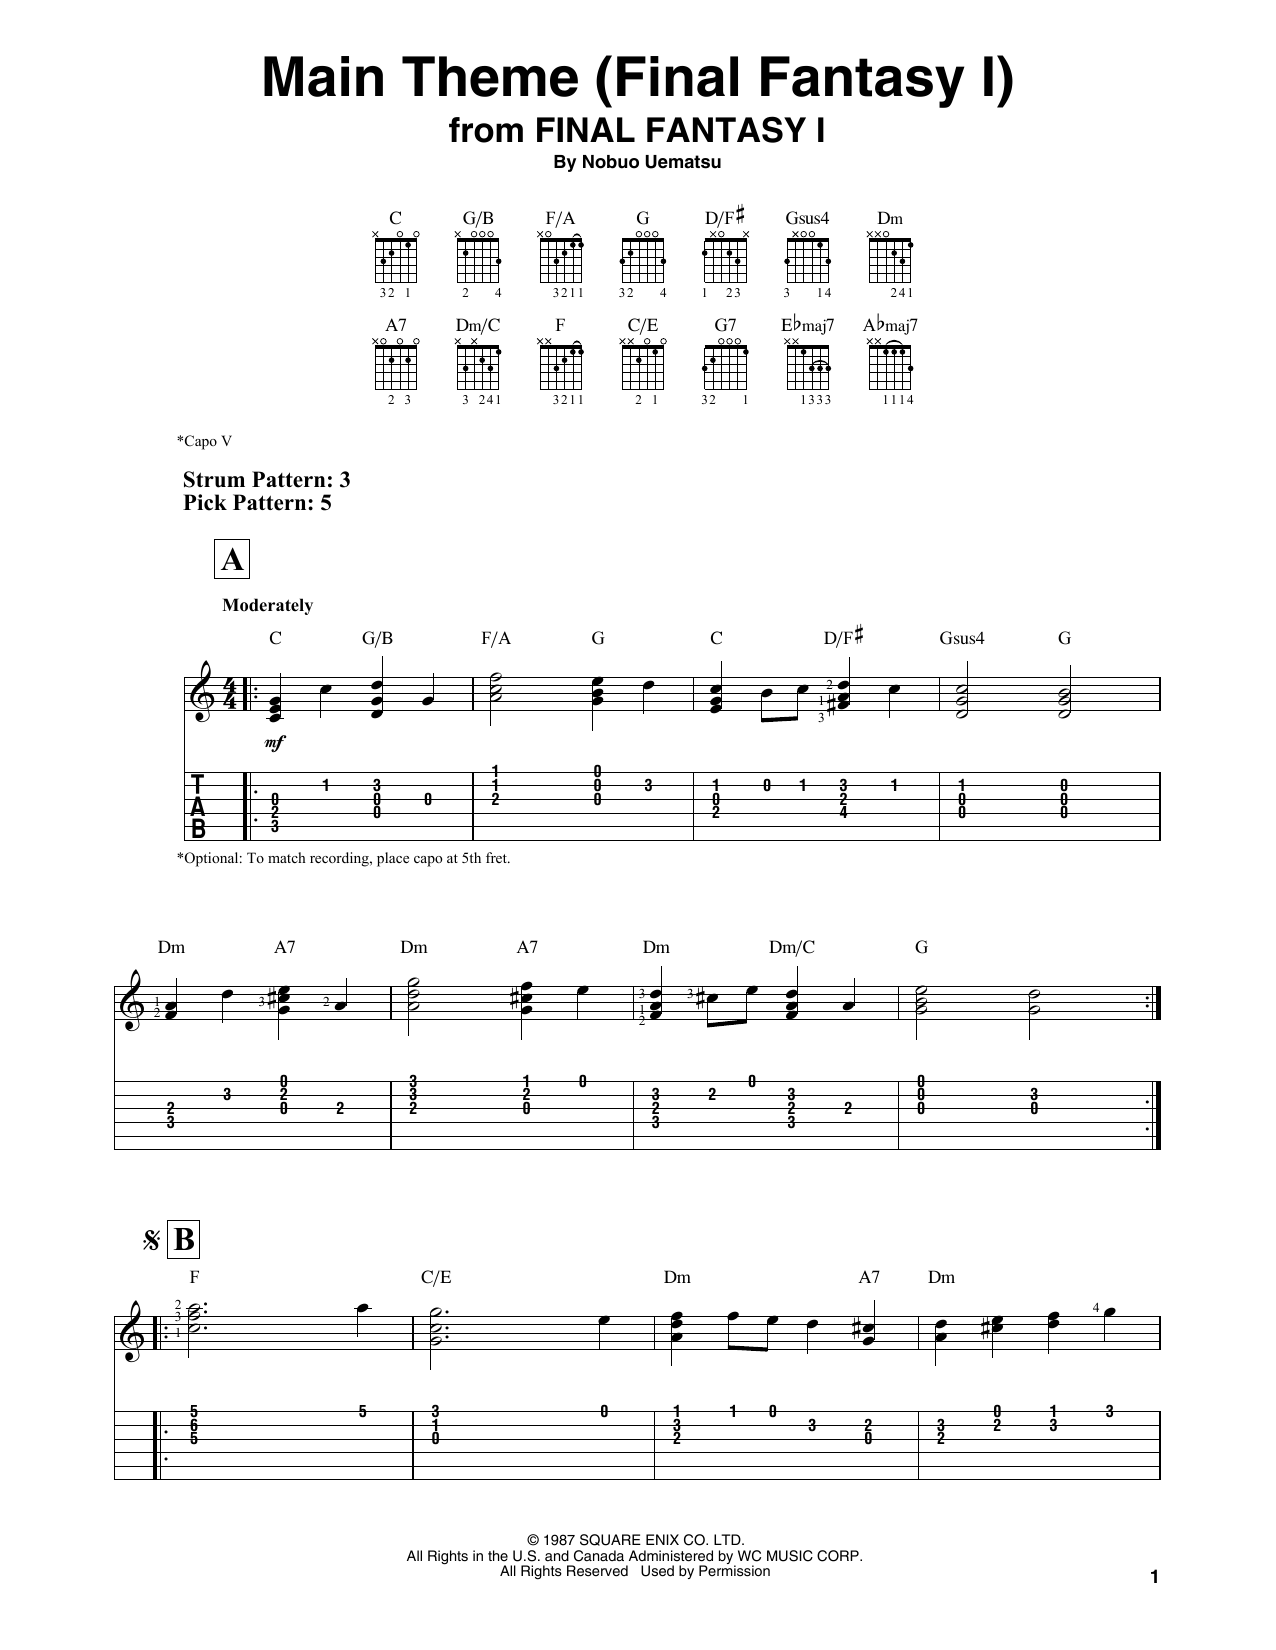 Nobuo Uematsu Main Theme (Final Fantasy I) Sheet Music Notes & Chords for Easy Guitar Tab - Download or Print PDF